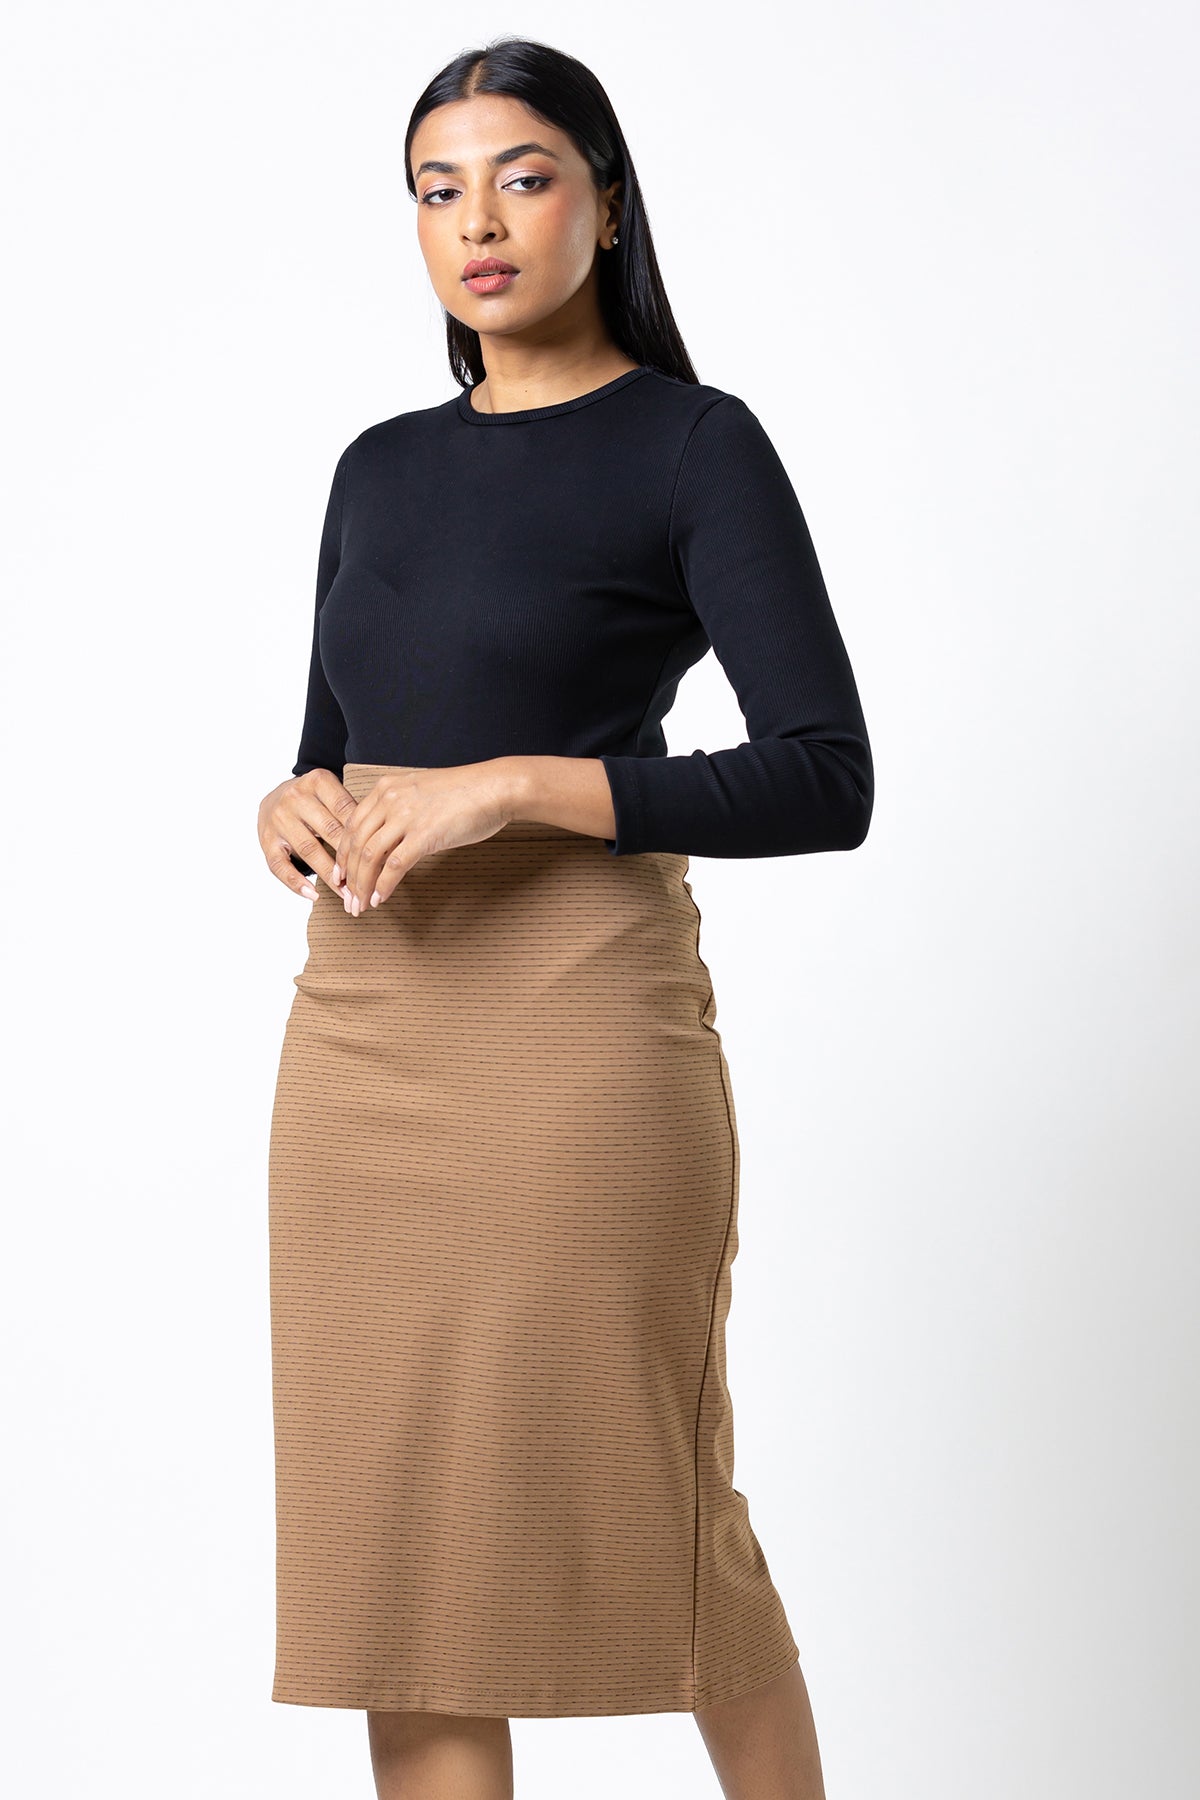 Envogue Women's Knee Length Printed Office Skirt